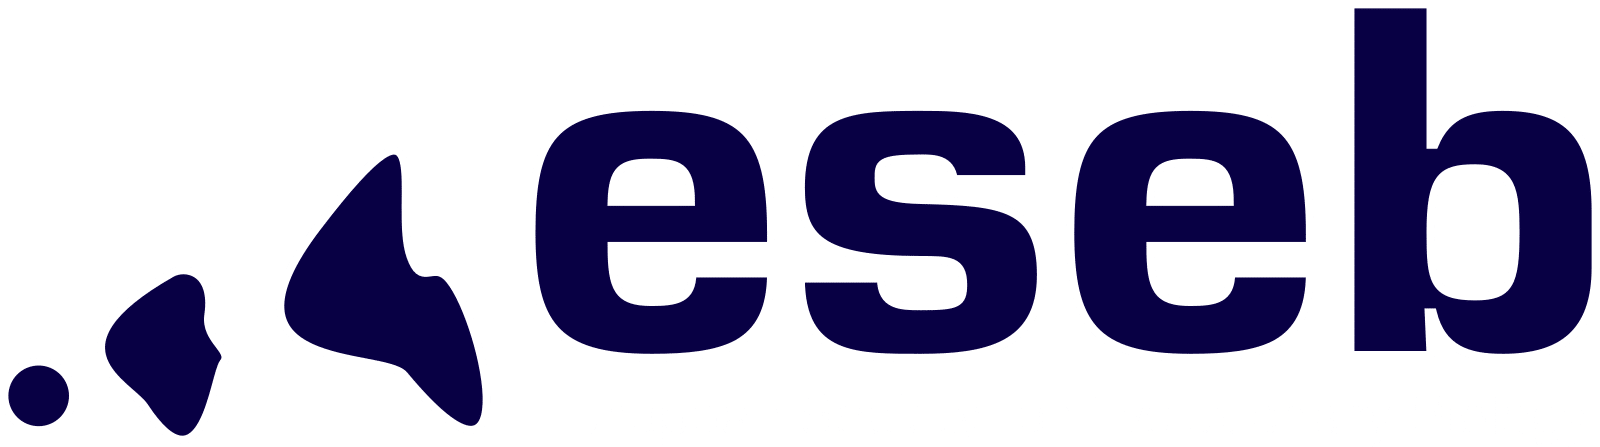 ESEB Logo w